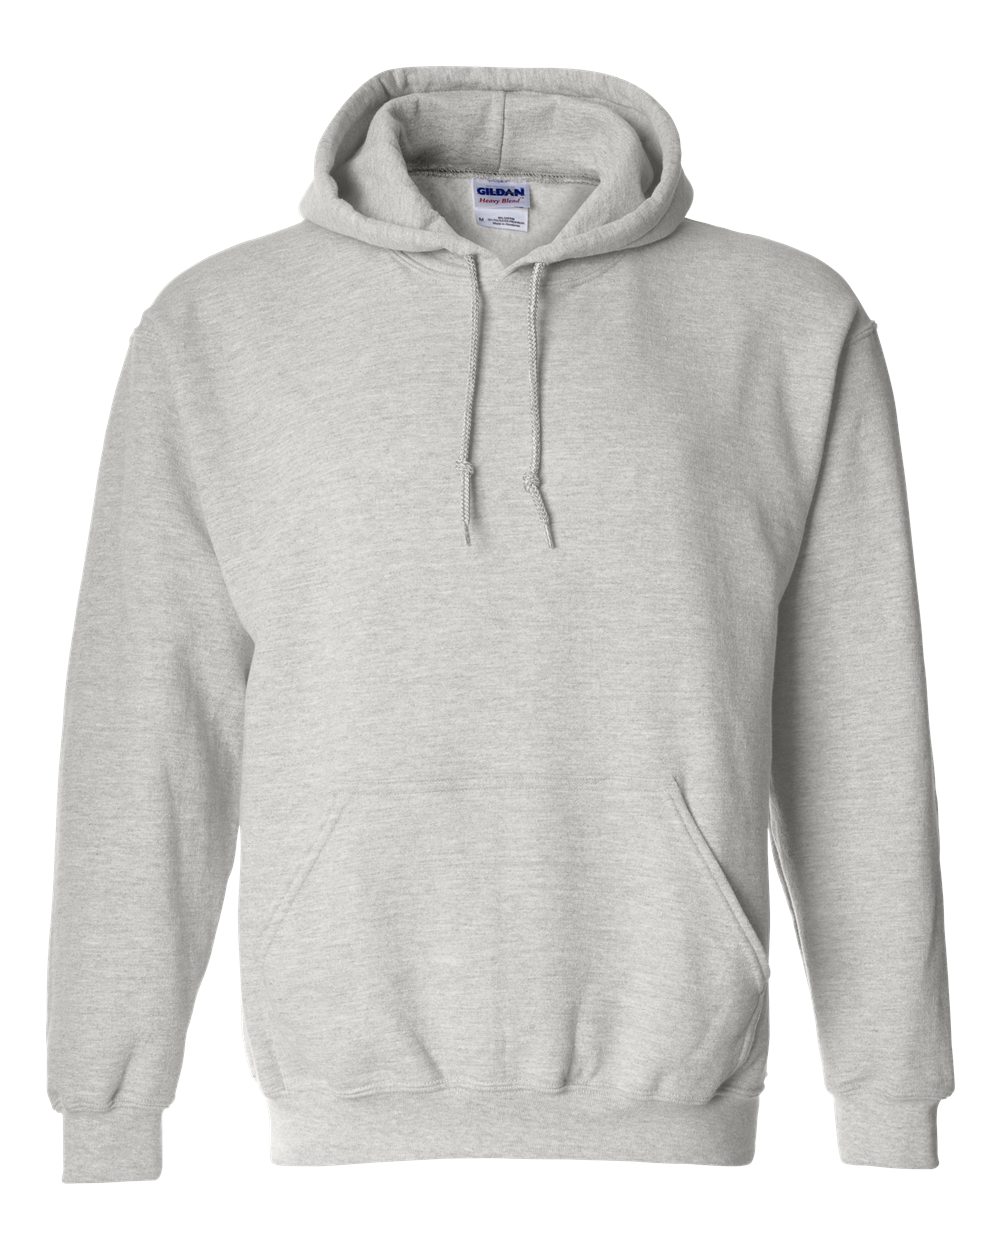 Adult Hooded Sweatshirt | Unisex Sweatshirts | T-Shirt Time